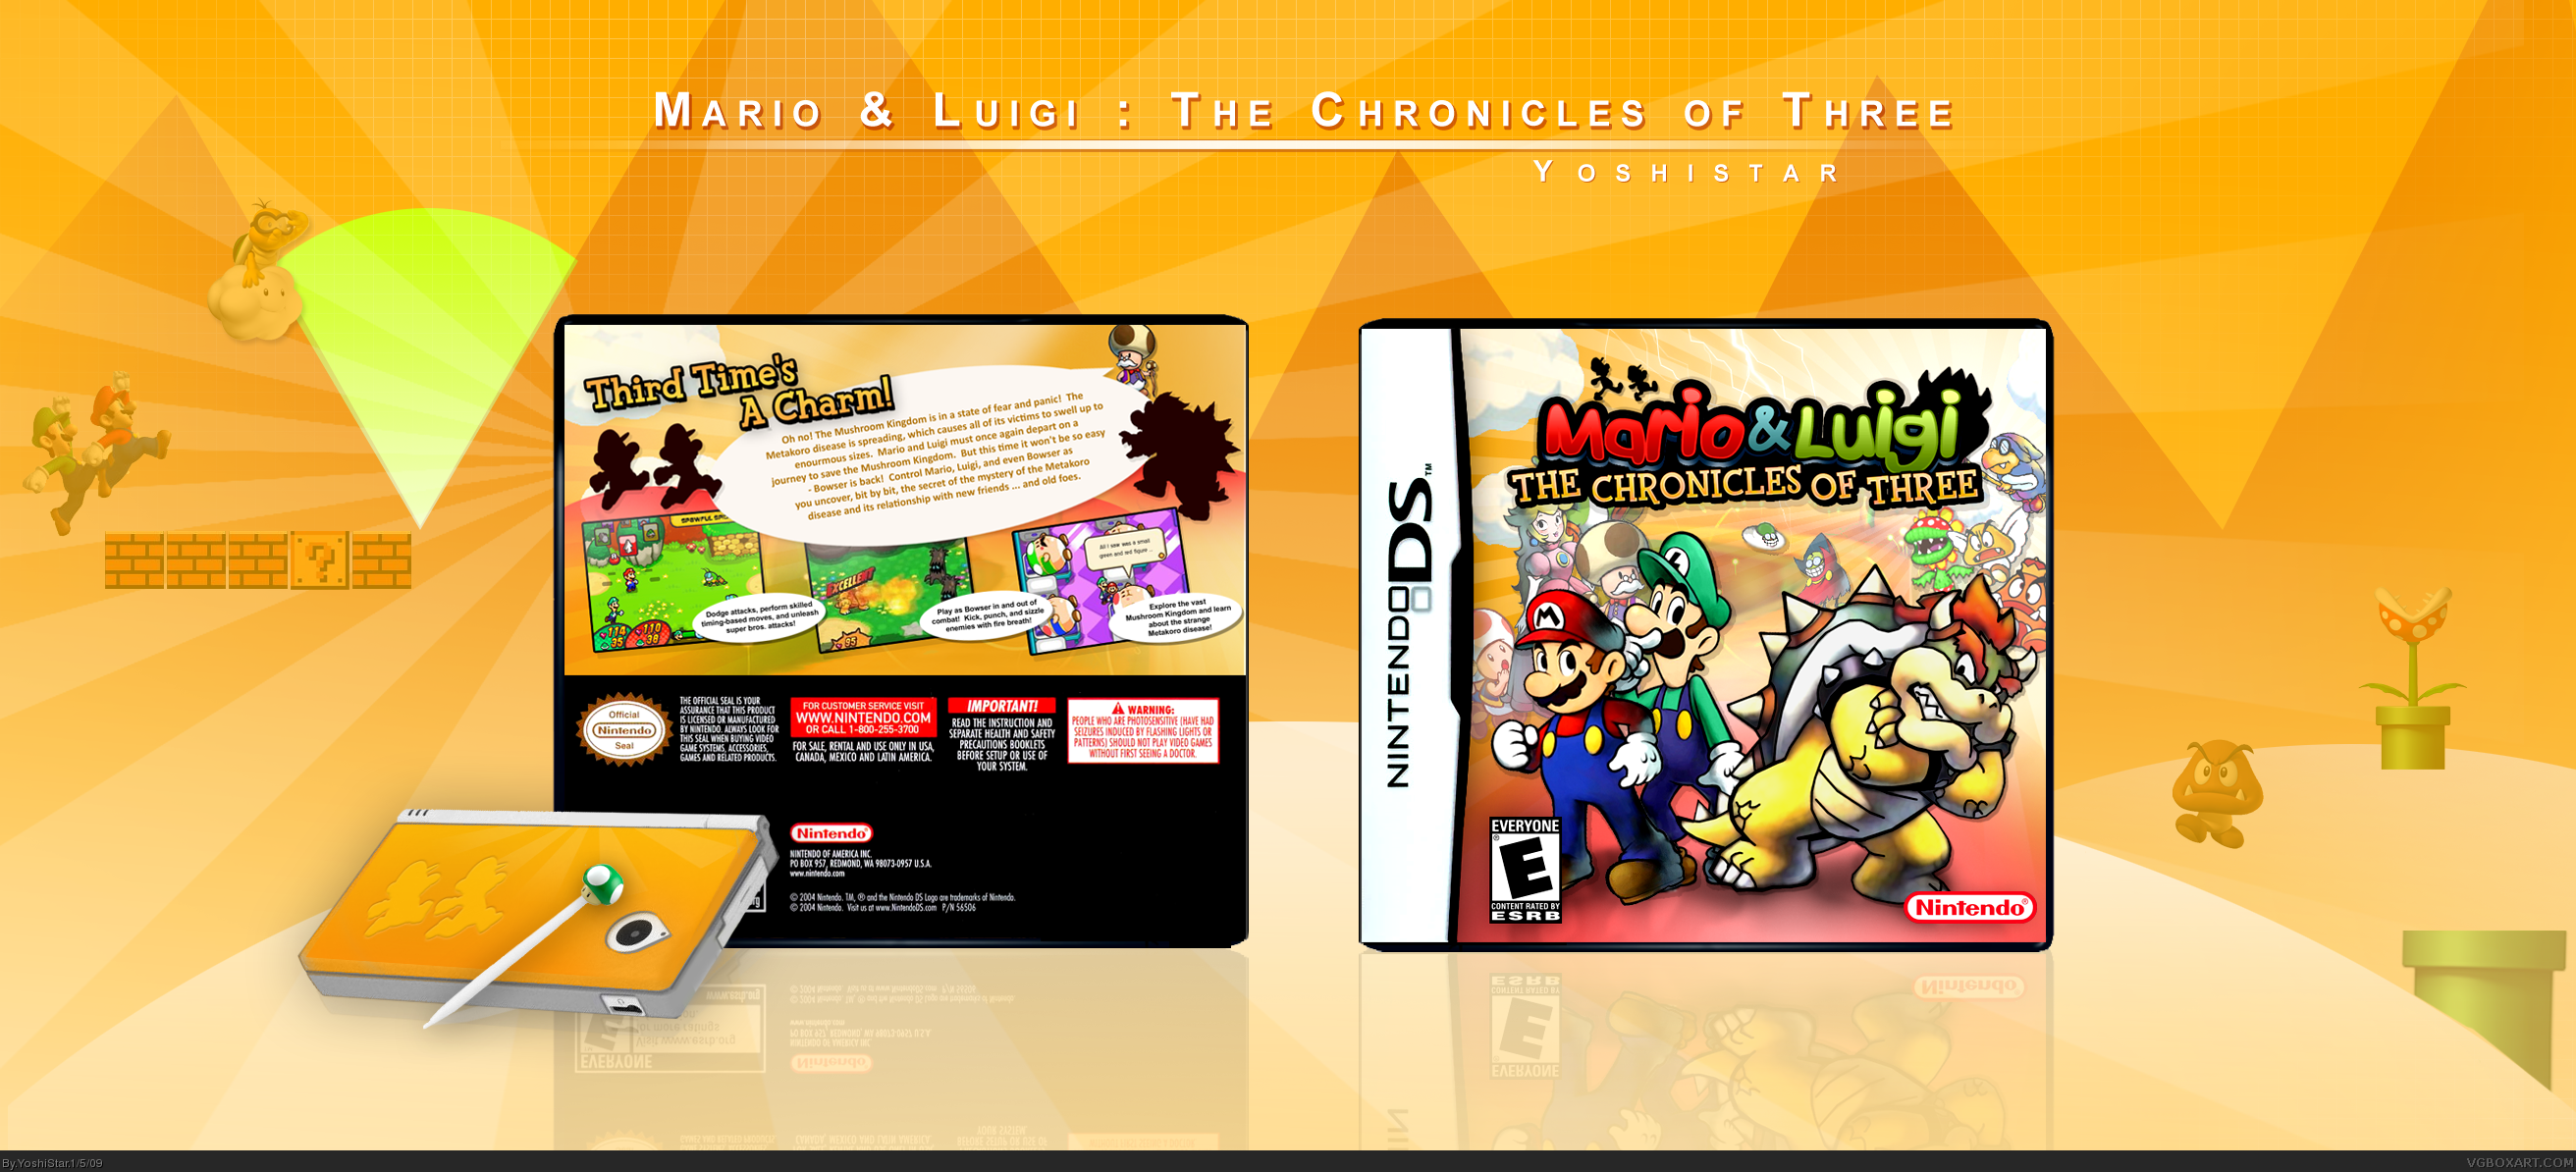 Mario & Luigi : The Chronicles of Three box cover